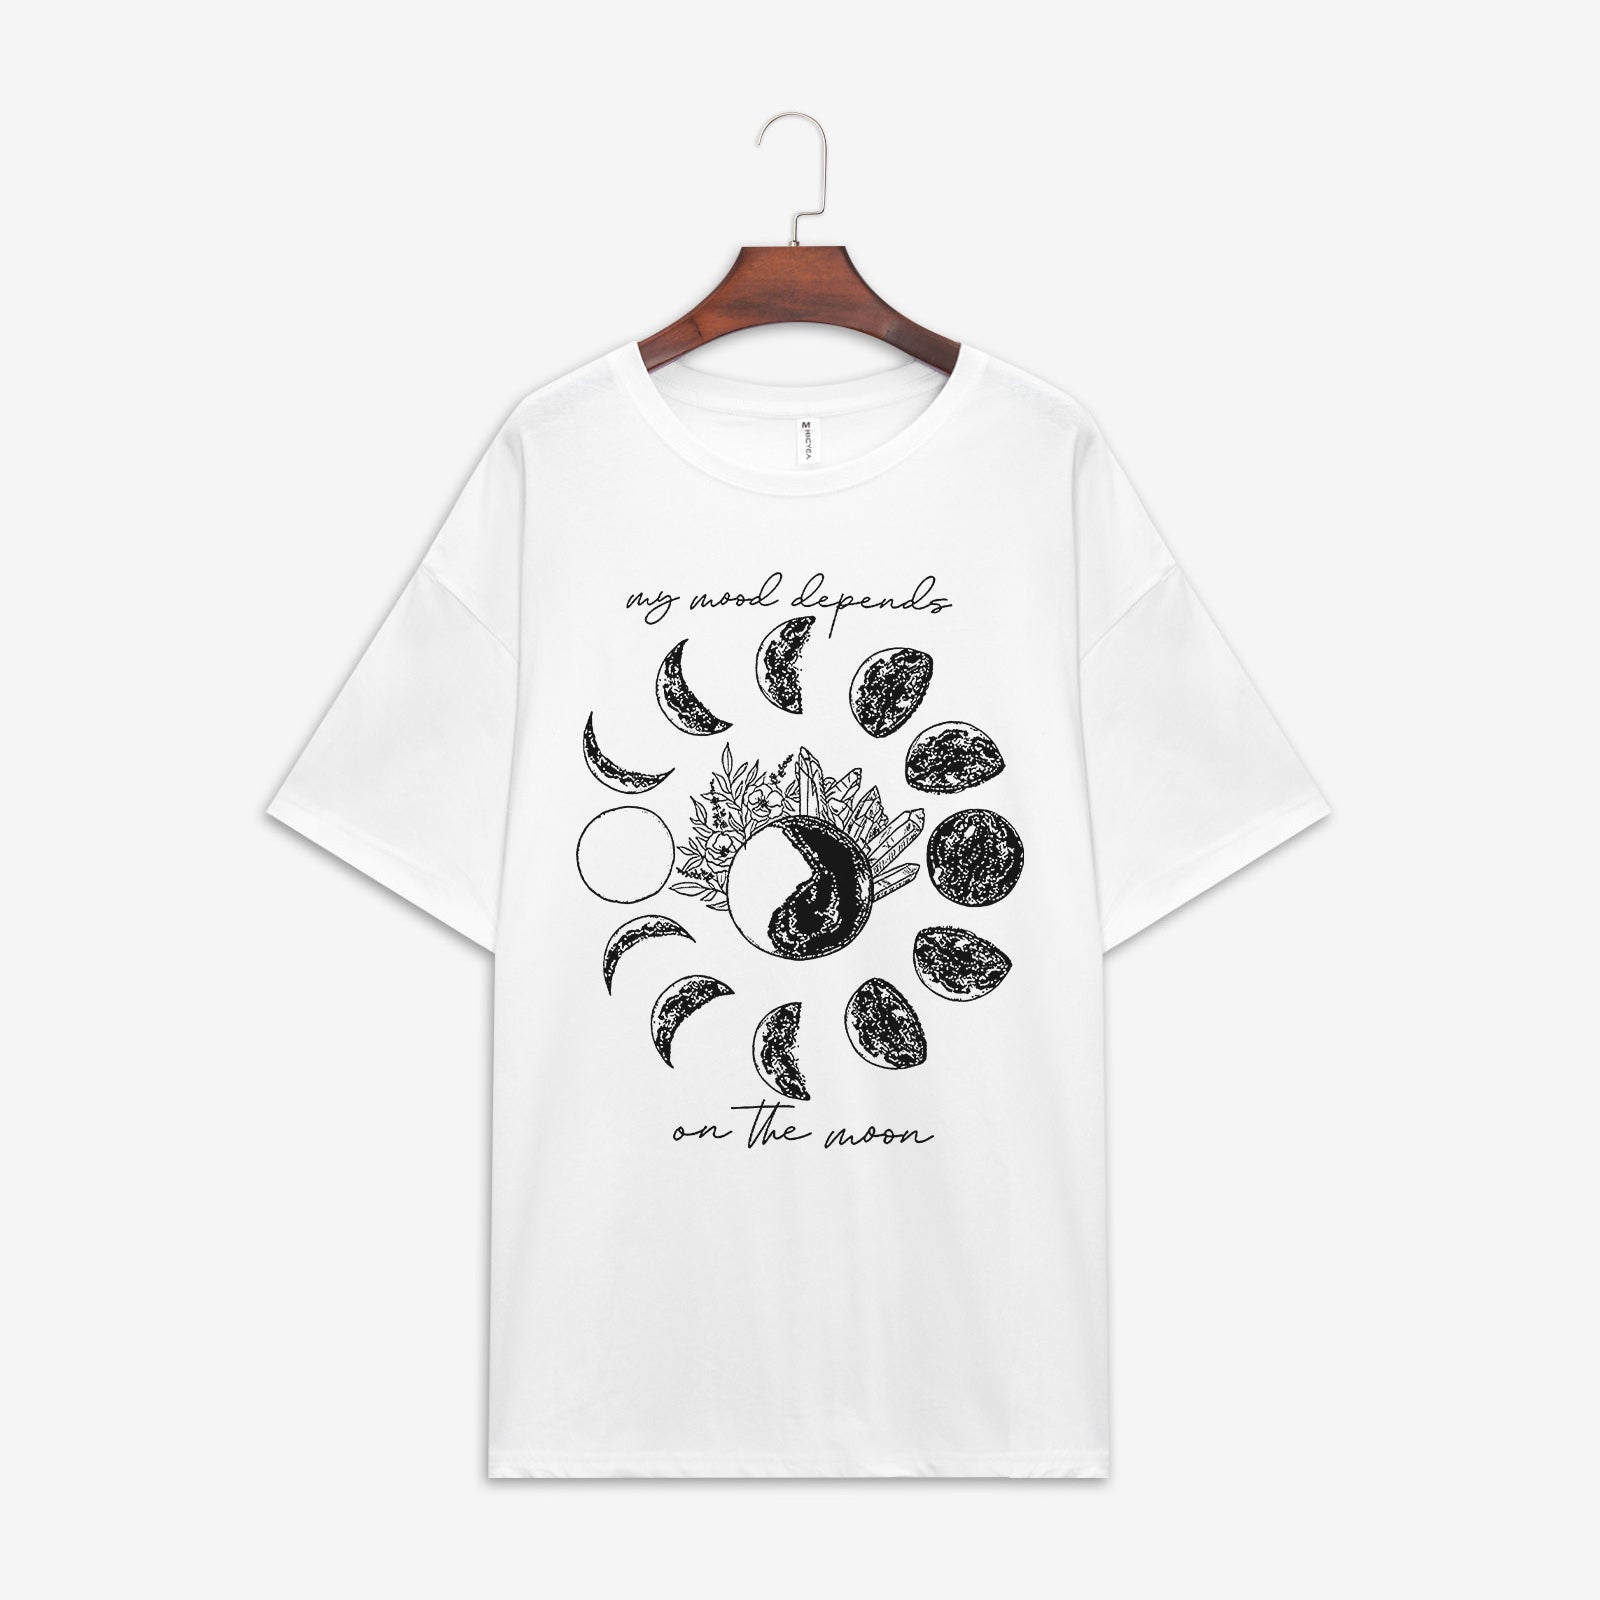 Minnieskull Eclipse Of The Moon Printing Women T-Shirt